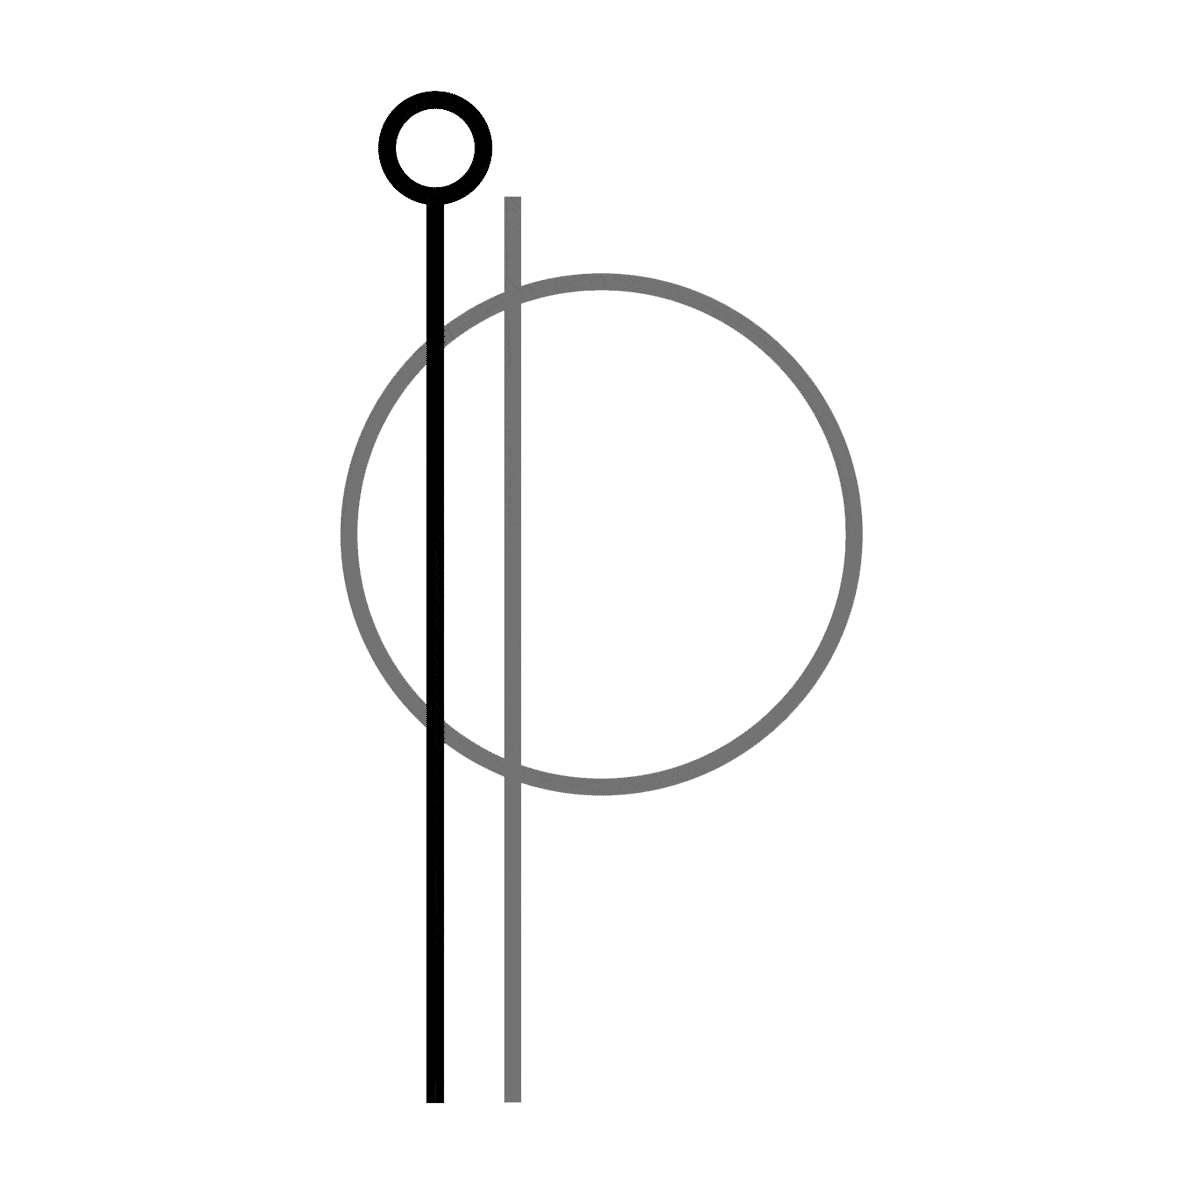 Immobilire-Plaine-symbole-2